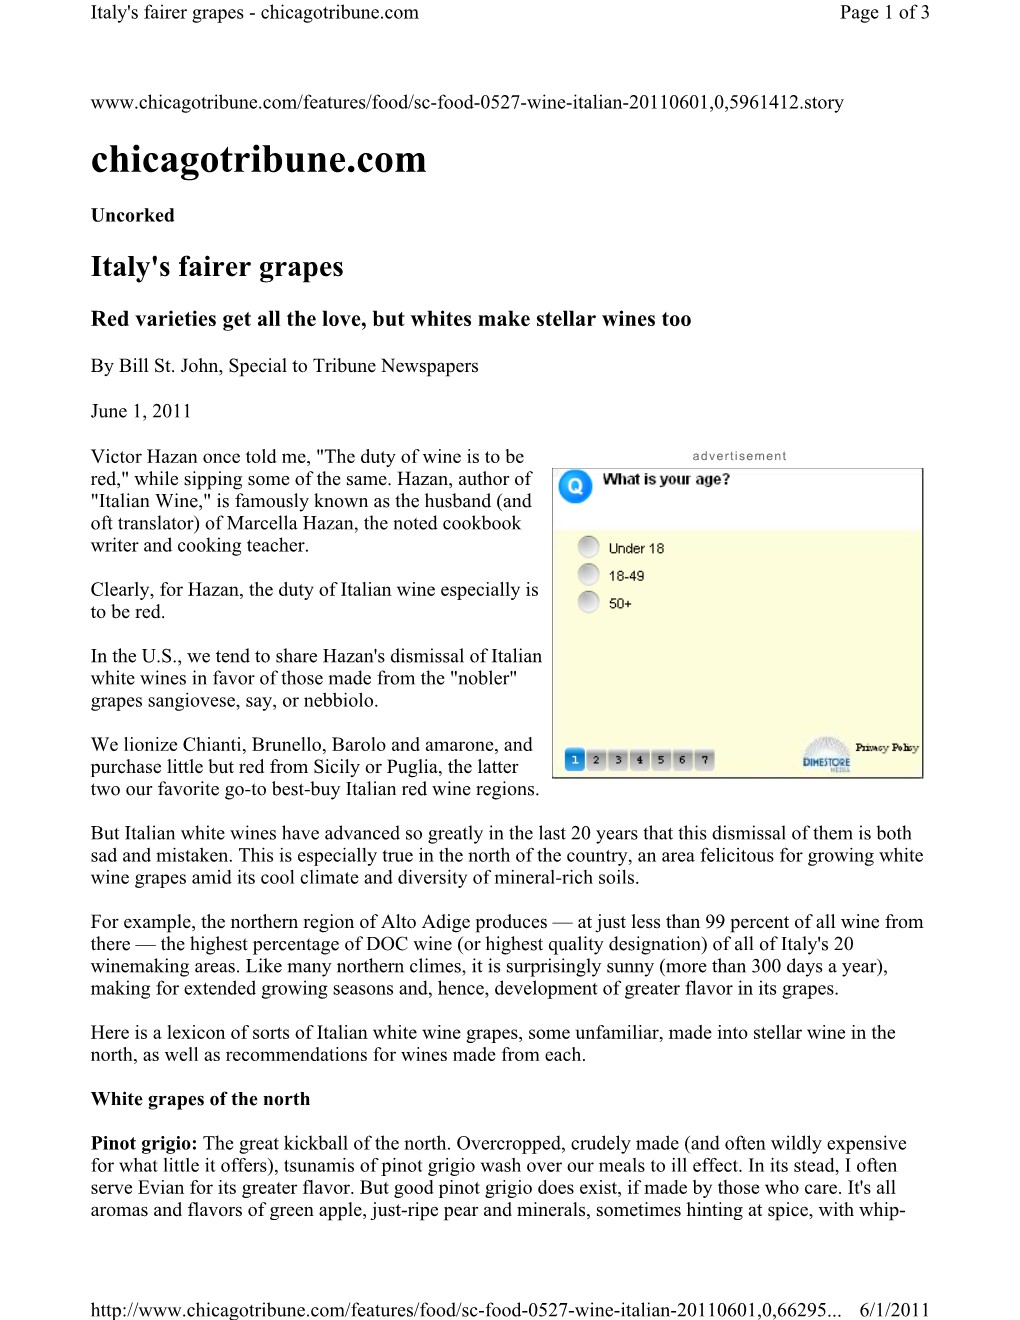 Chicagotribune.Com Page 1 of 3